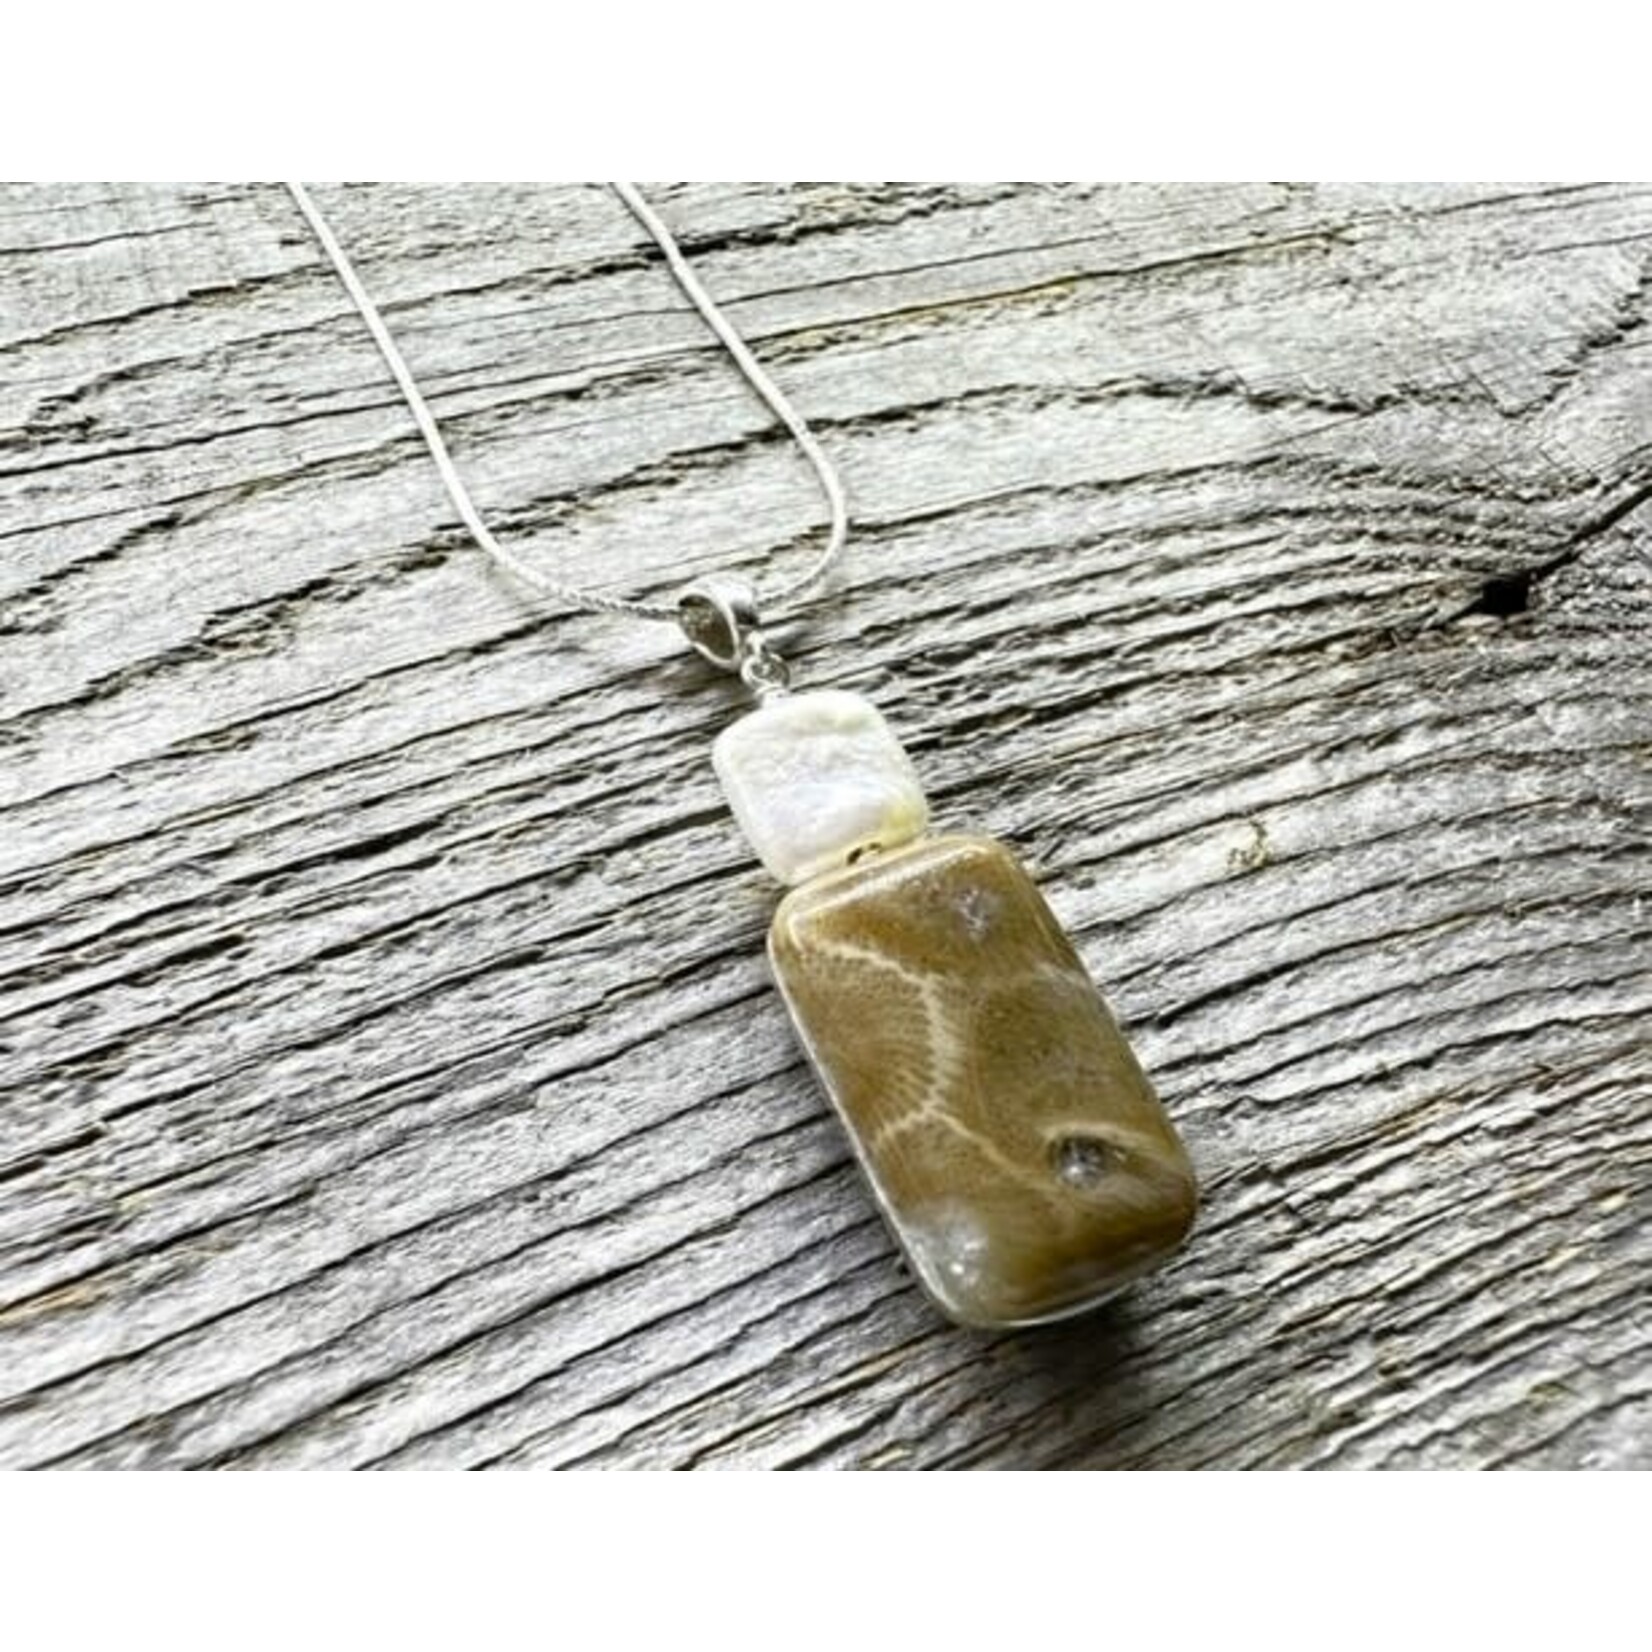 Necklace Pendant - Petoskey Stone & Freshwater Pearl